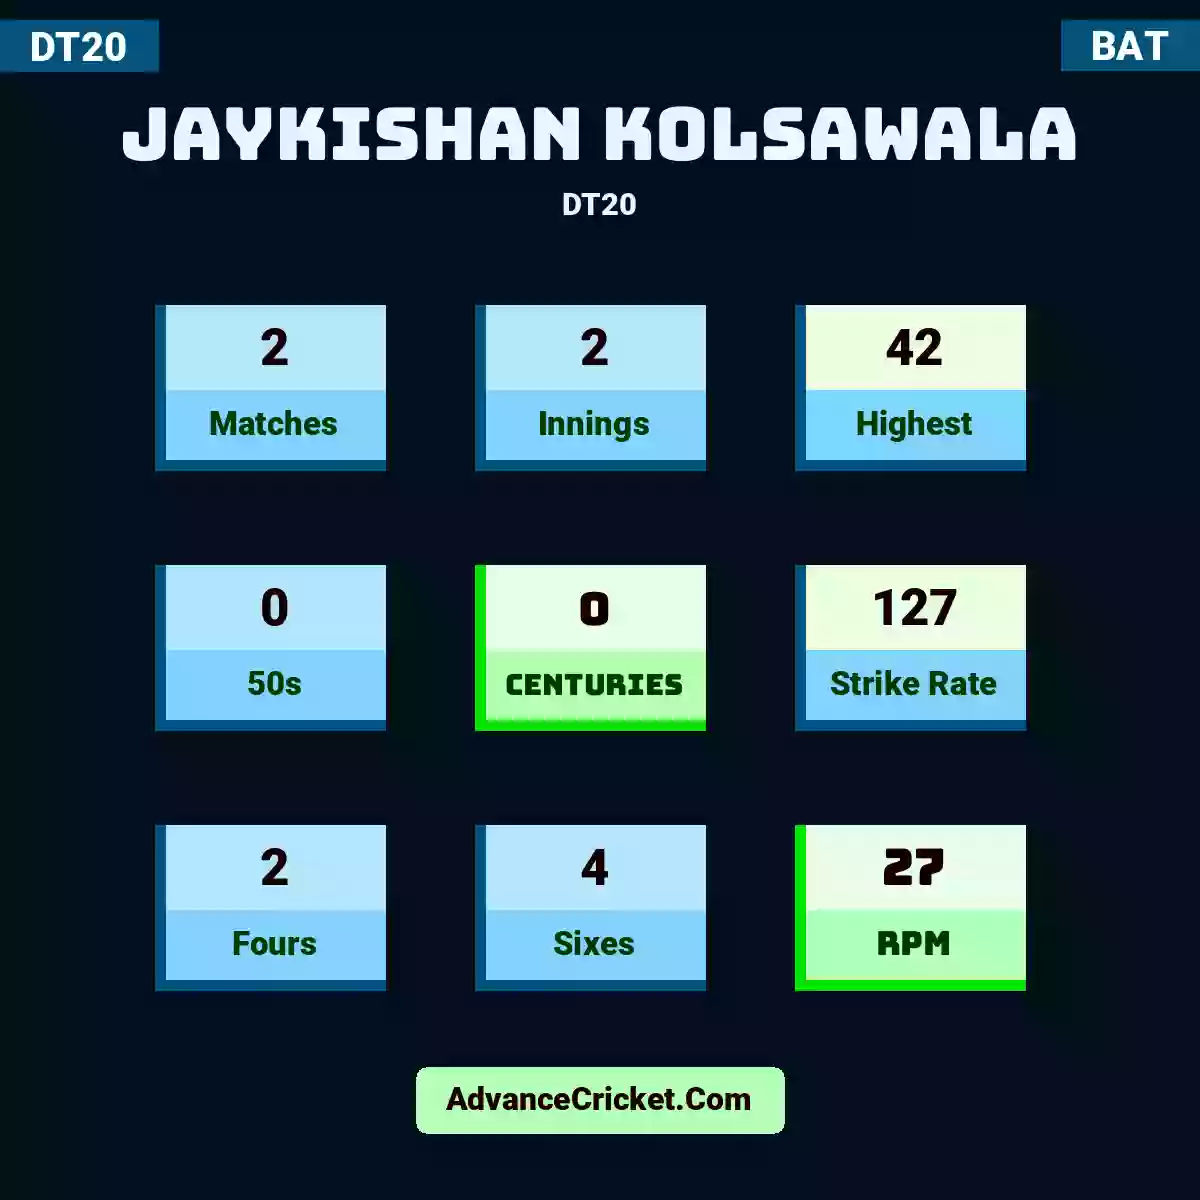 Jaykishan Kolsawala DT20 , Jaykishan Kolsawala played 2 matches, scored 42 runs as highest, 0 half-centuries, and 0 centuries, with a strike rate of 127. J.Kolsawala hit 2 fours and 4 sixes, with an RPM of 27.